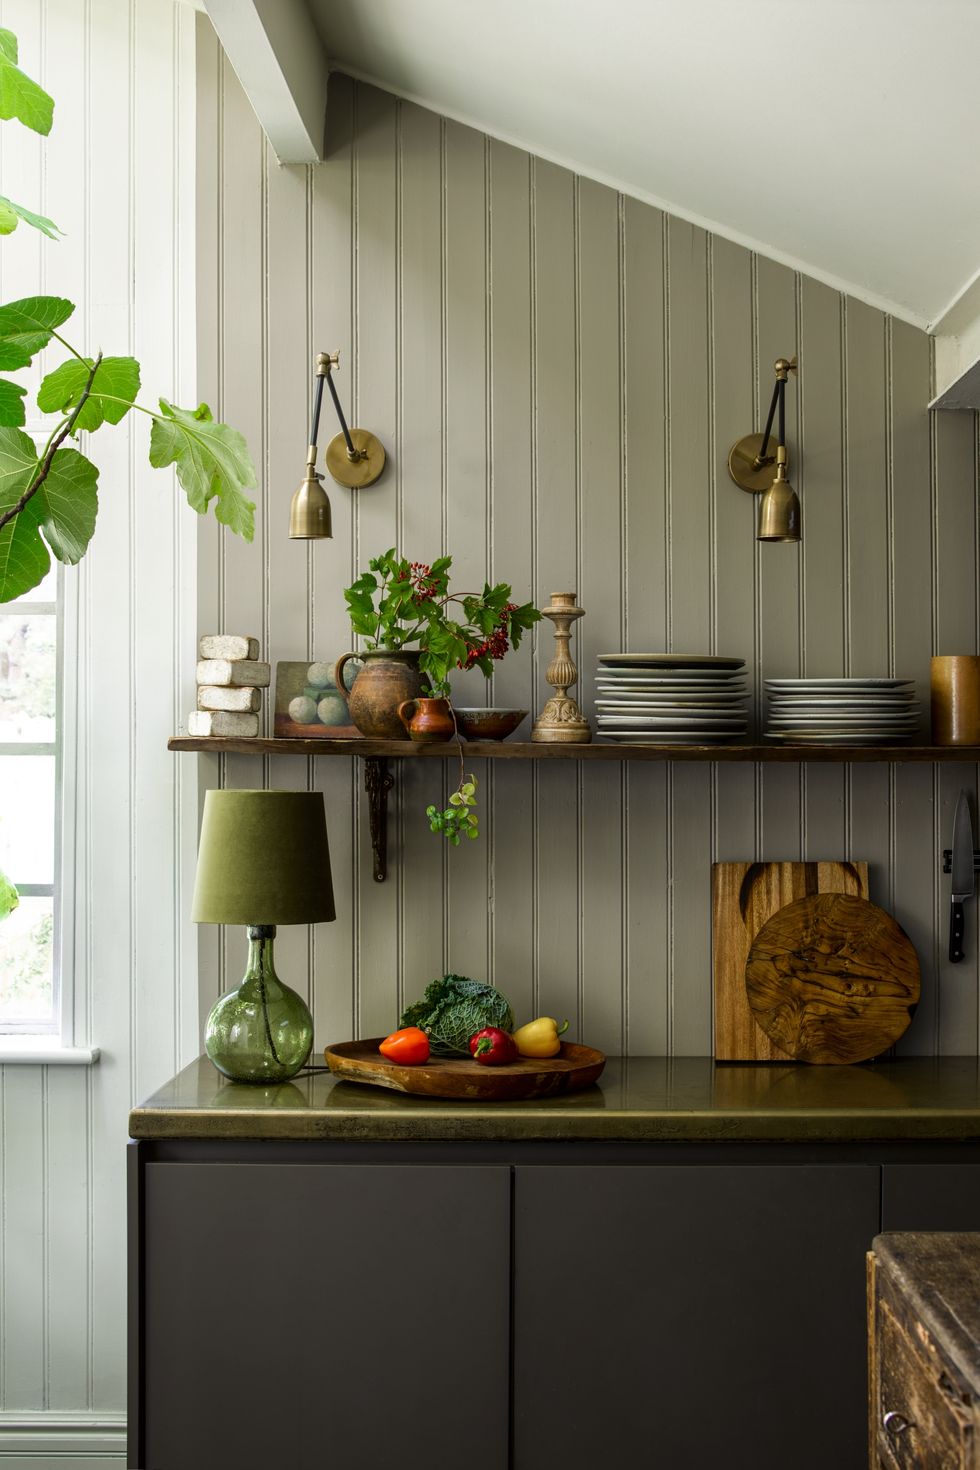 Green Kitchens - 29 Inspiring Green Kitchen Ideas